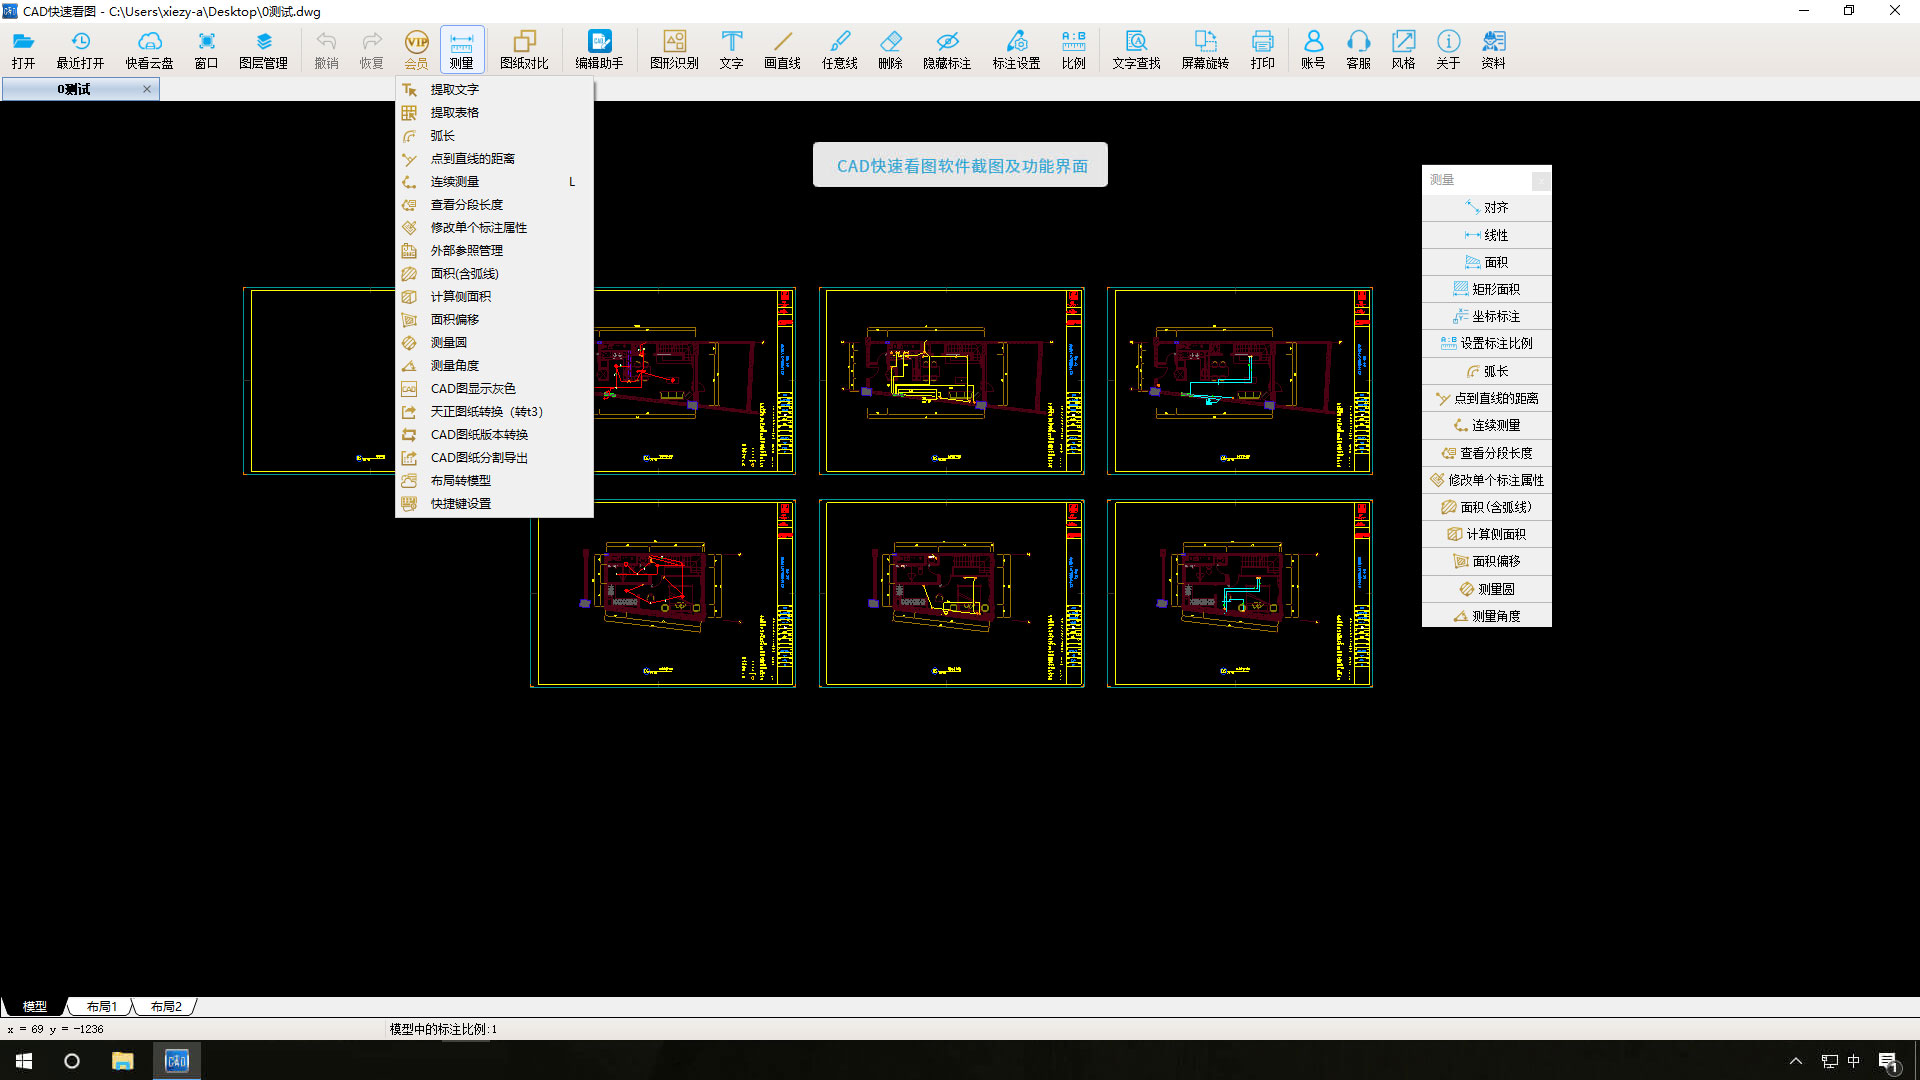 CAD快速看图软件截图及功能界面